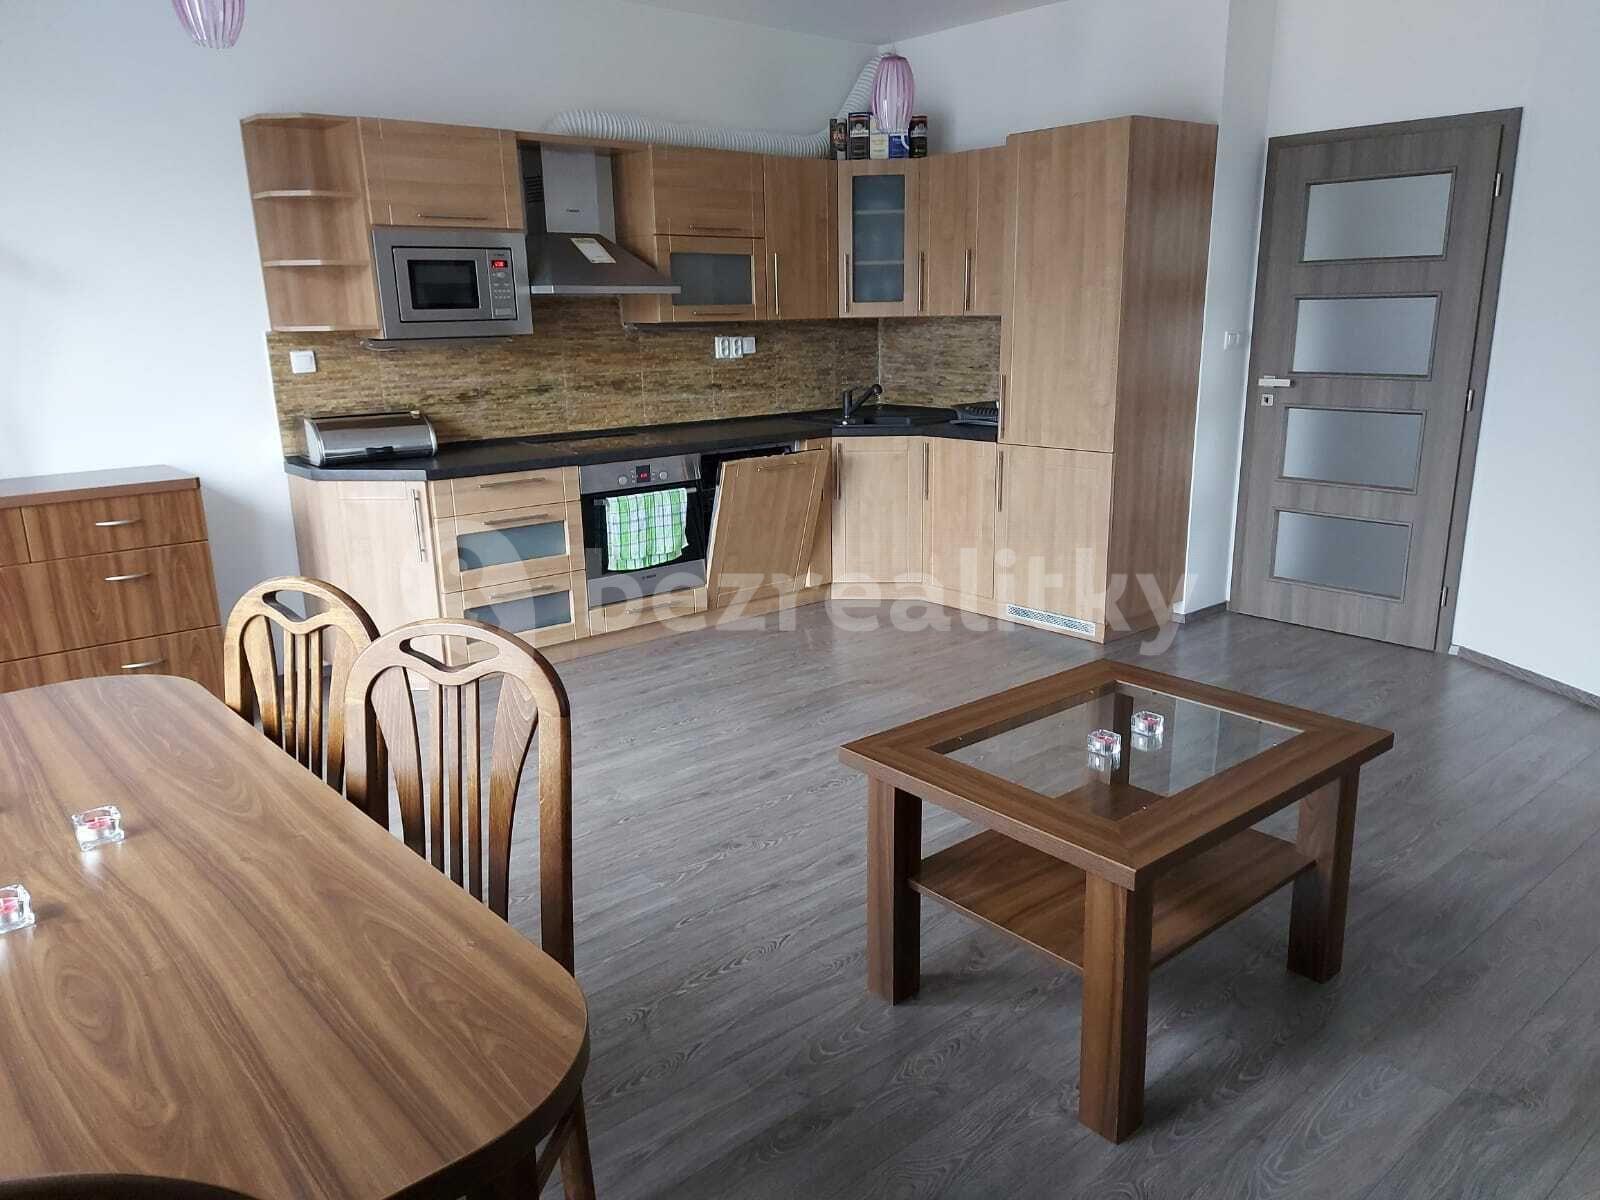 1 bedroom with open-plan kitchen flat to rent, 57 m², Blšanecká, Prague, Prague